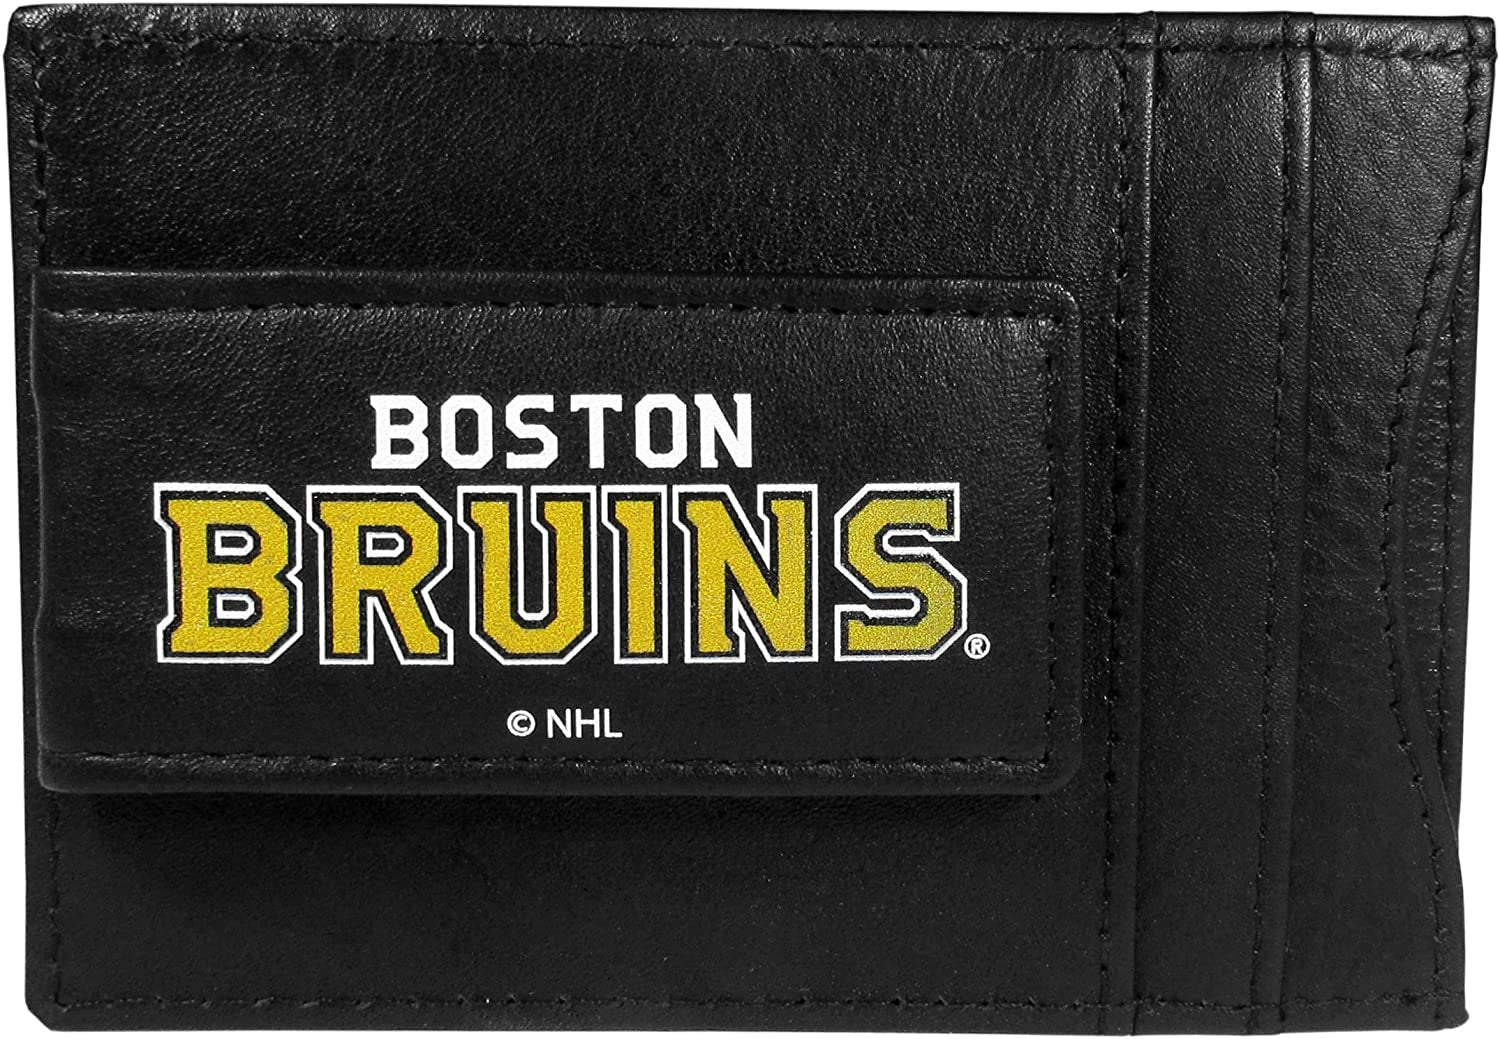 Boston Bruins Black Leather Wallet, Front Pocket Magnetic Money Clip, Printed Logo